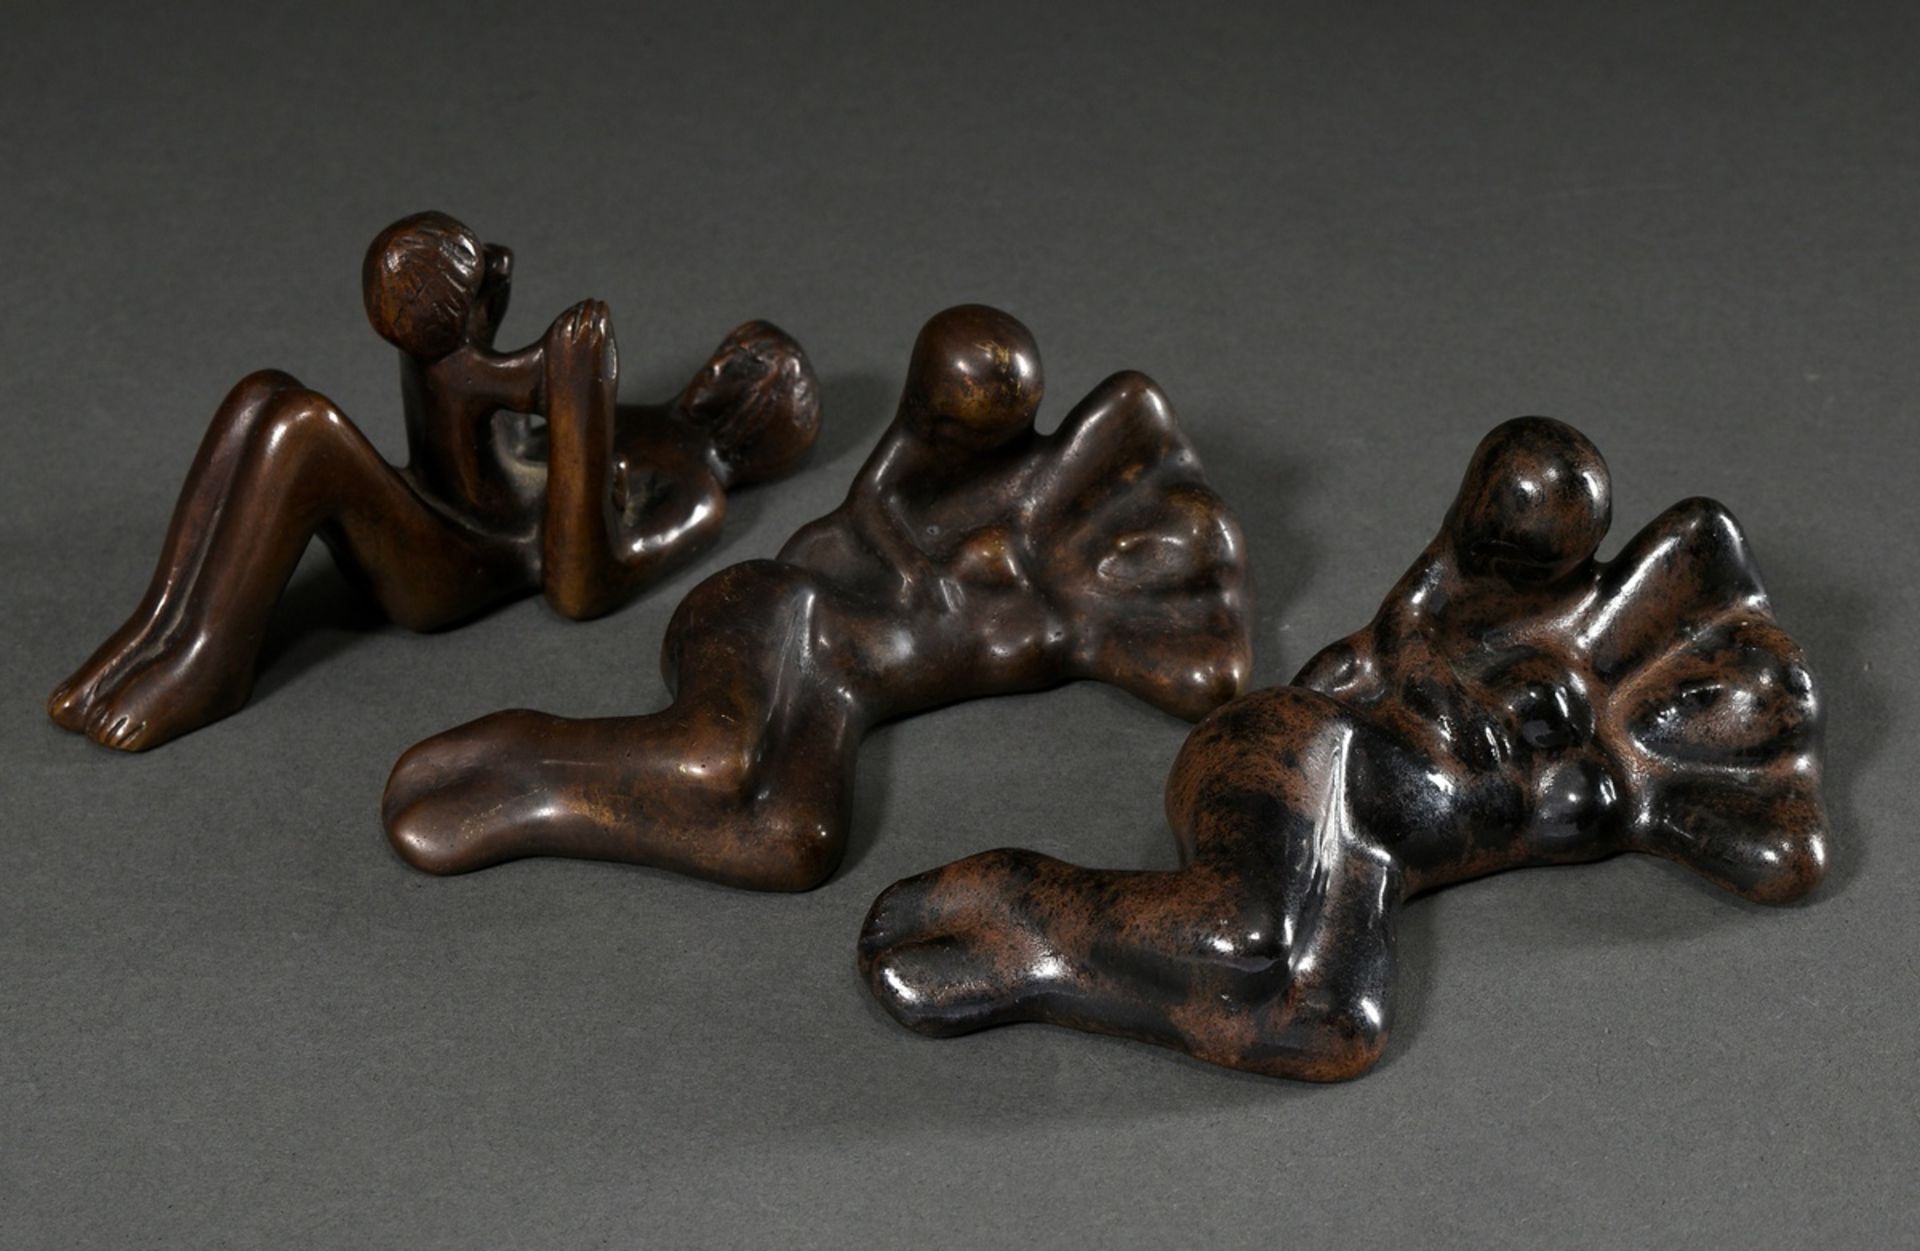 3 Diverse Maetzel, Monika (1917-2010) Figurengruppen "Mutter mit Kind" , Bronze patiniert/Keramik g